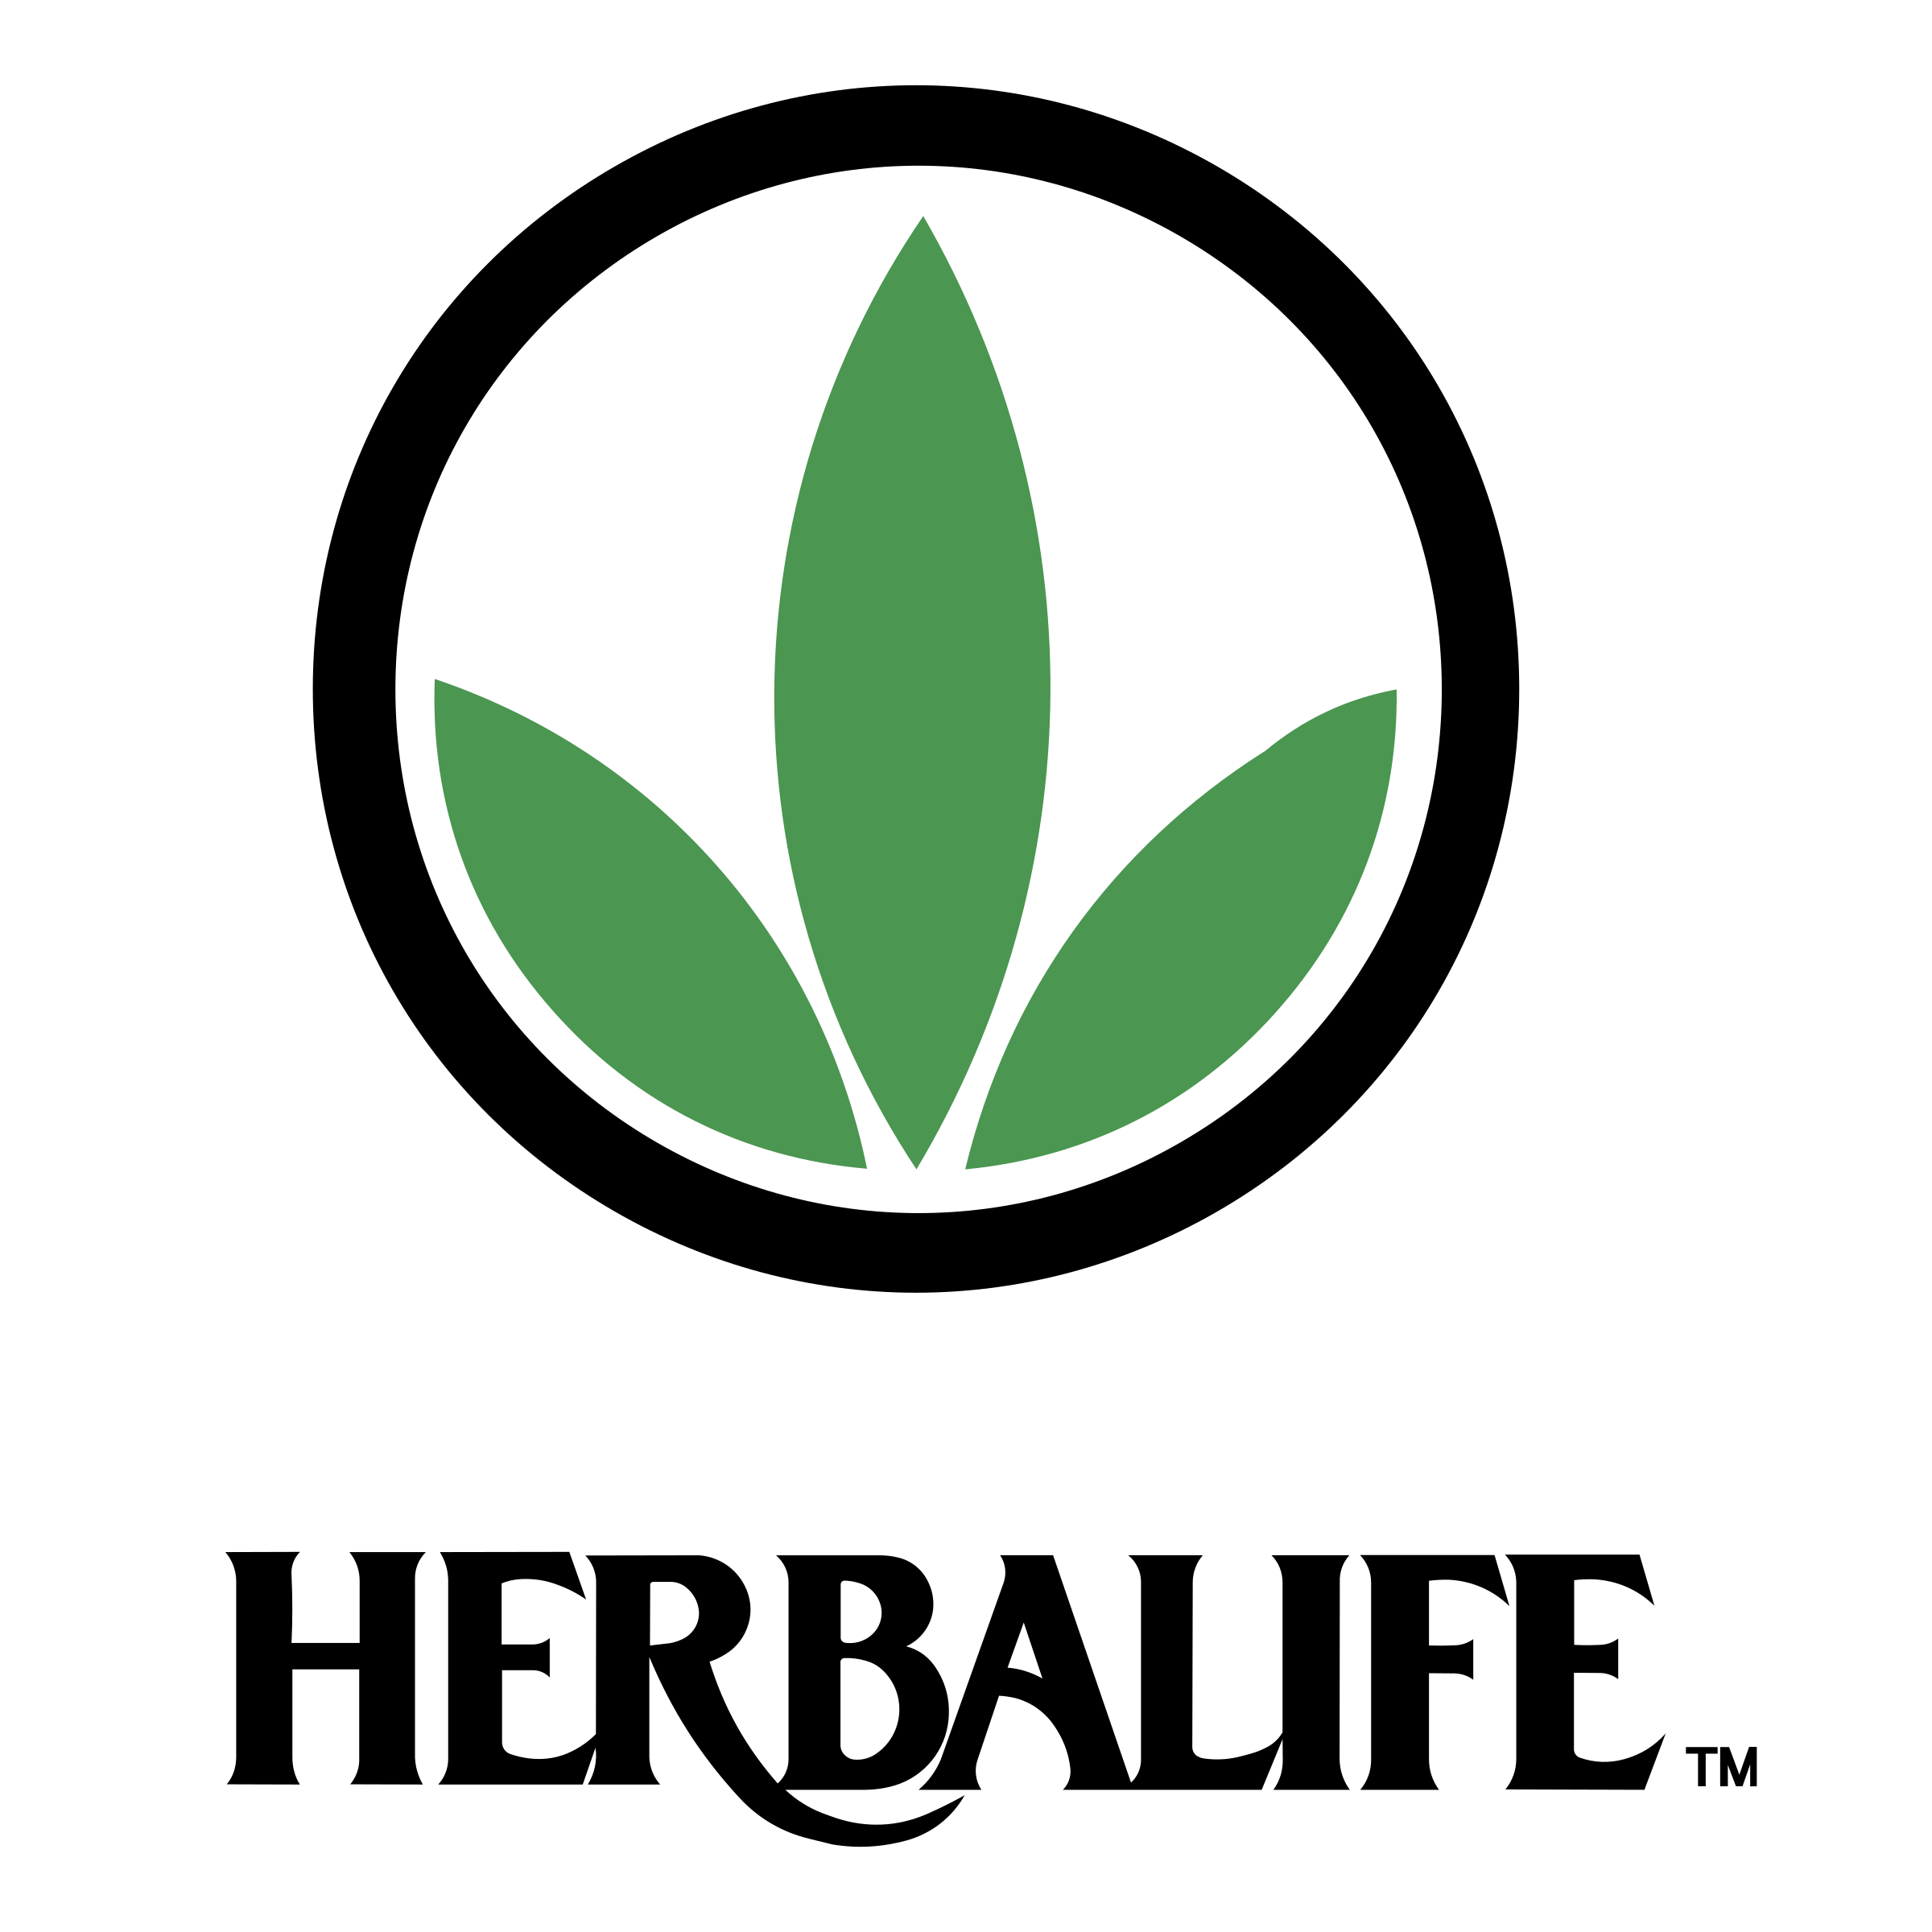 Herbalife Logo PNG Transparent & SVG Vector - Freebie Supply - Herbalife Logo.png